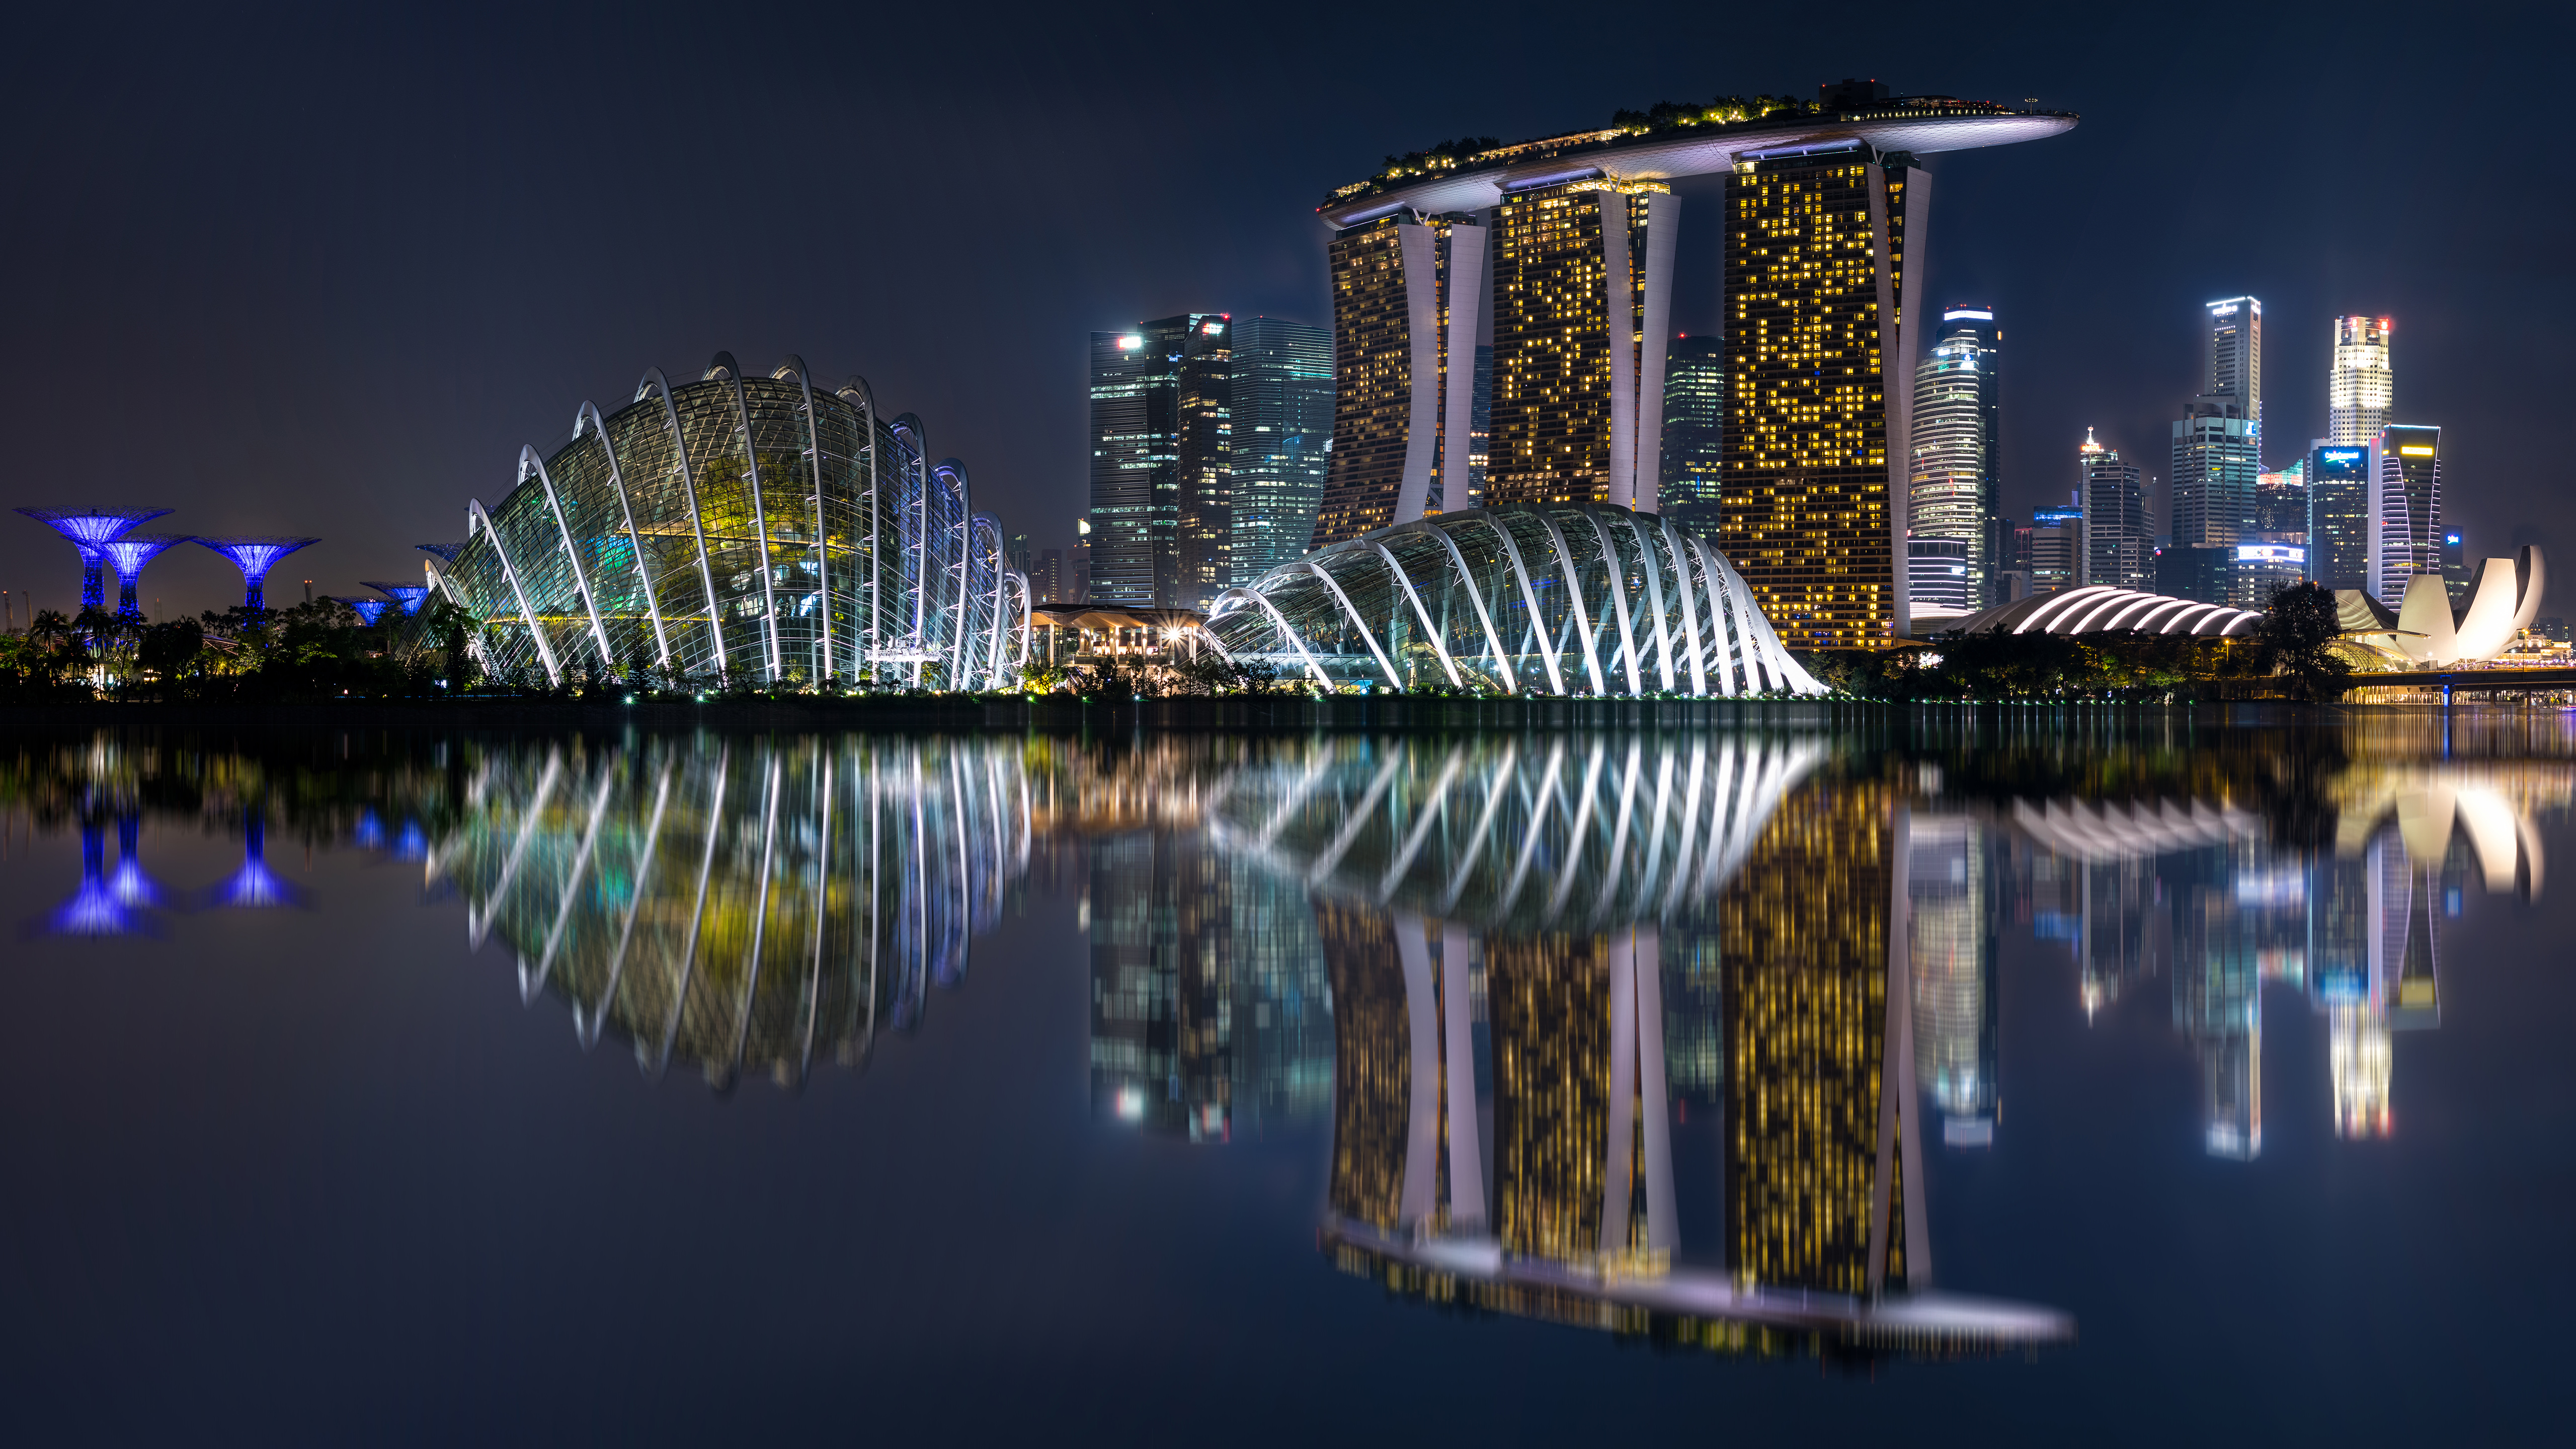 Free Images night, building, marina bay sands, man made Singapore